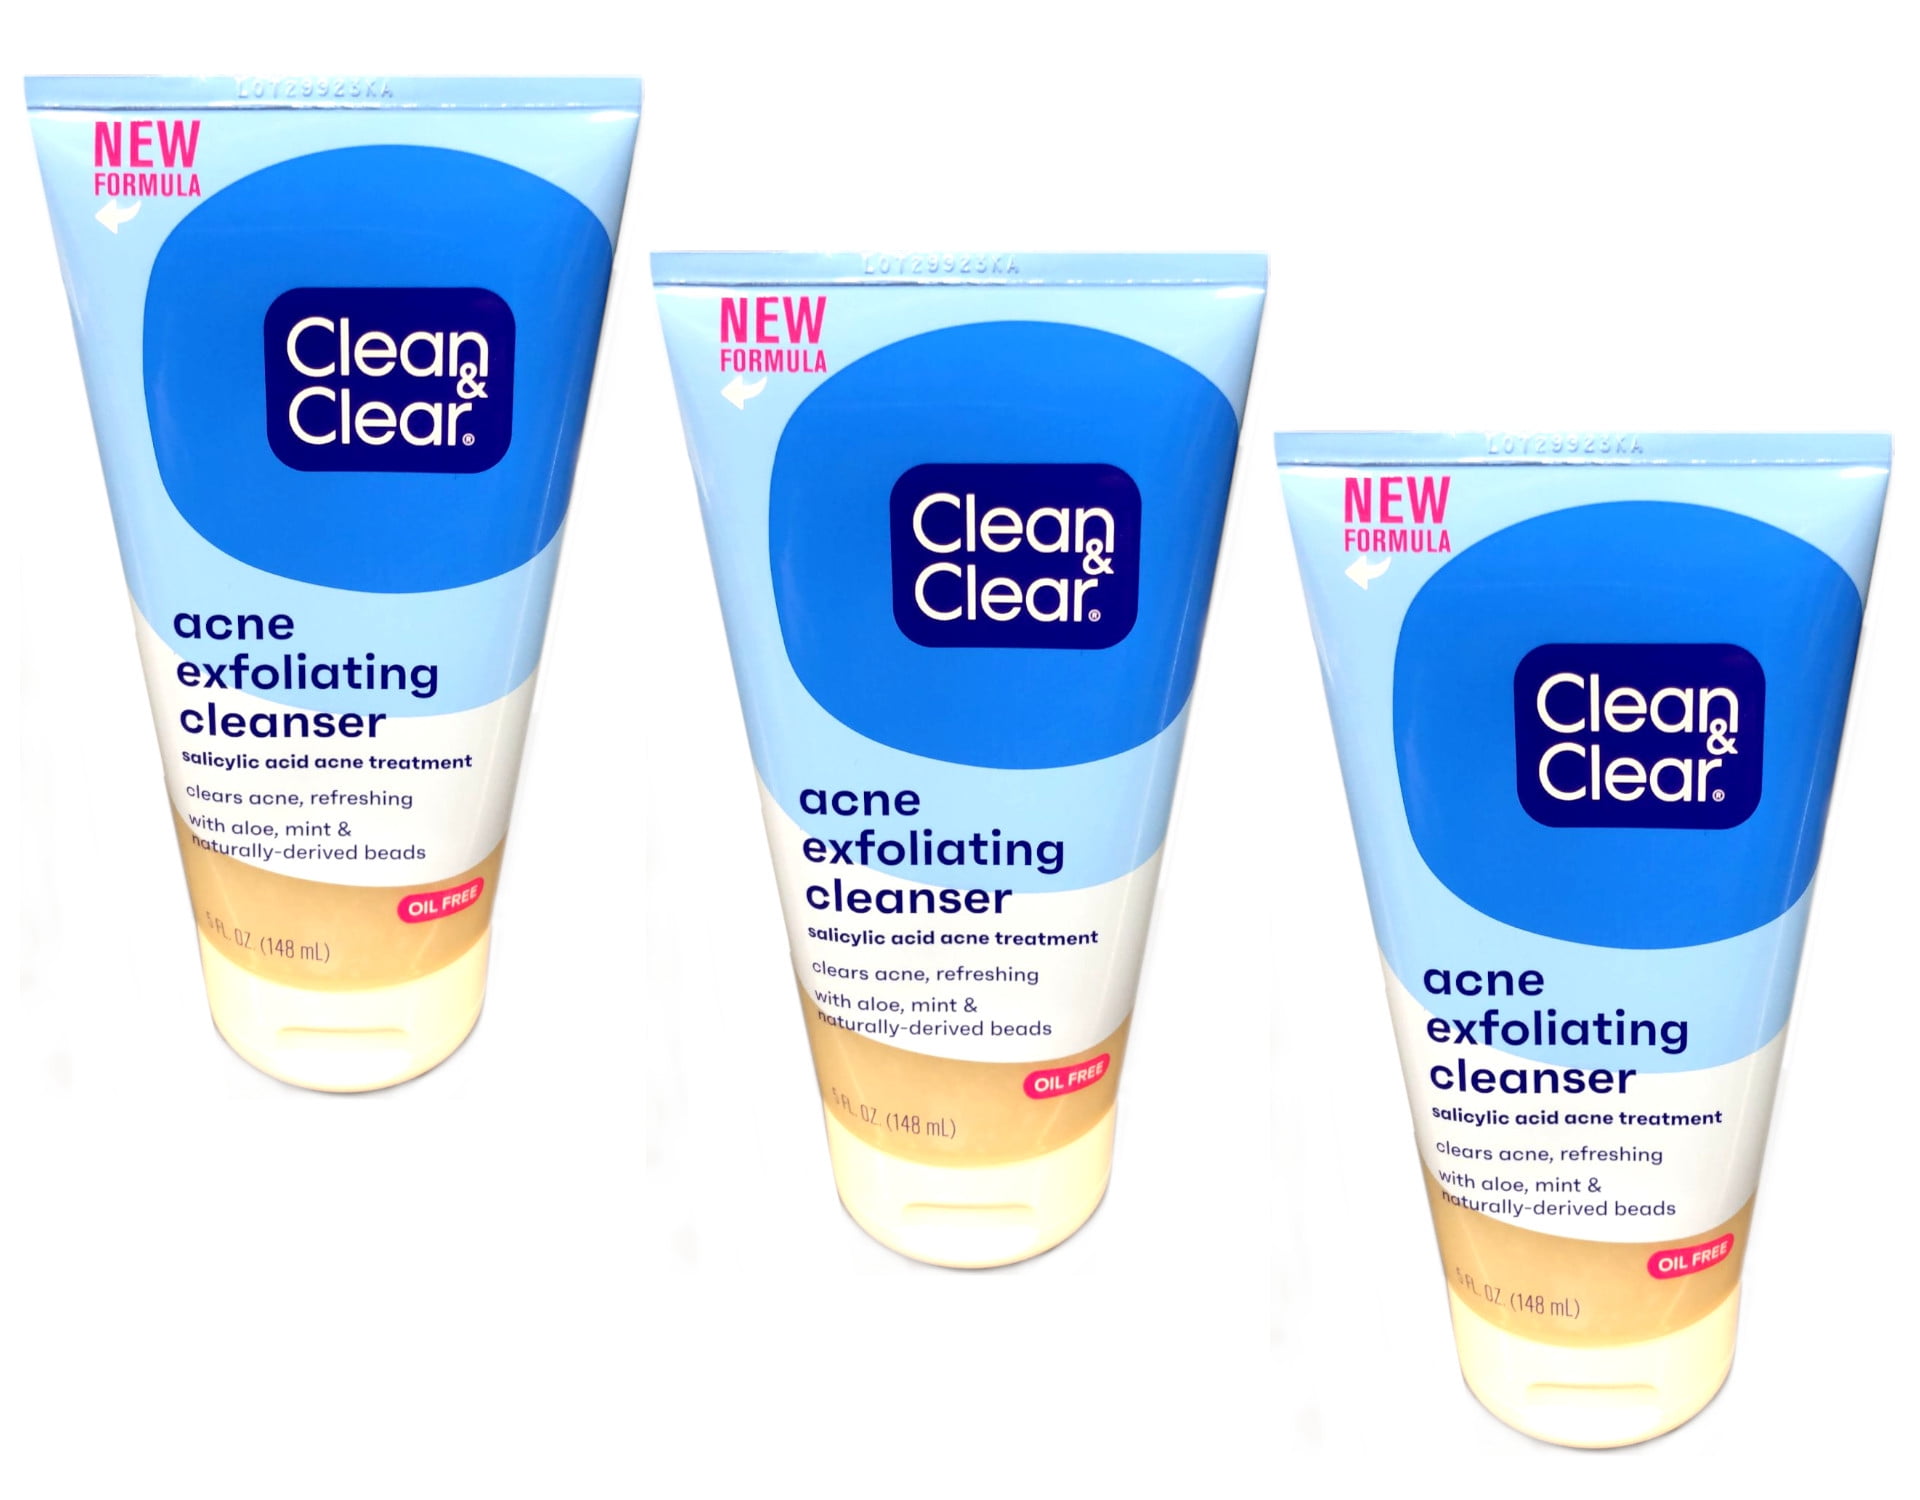 Clean & Clear®  Acne Treatment & Skincare